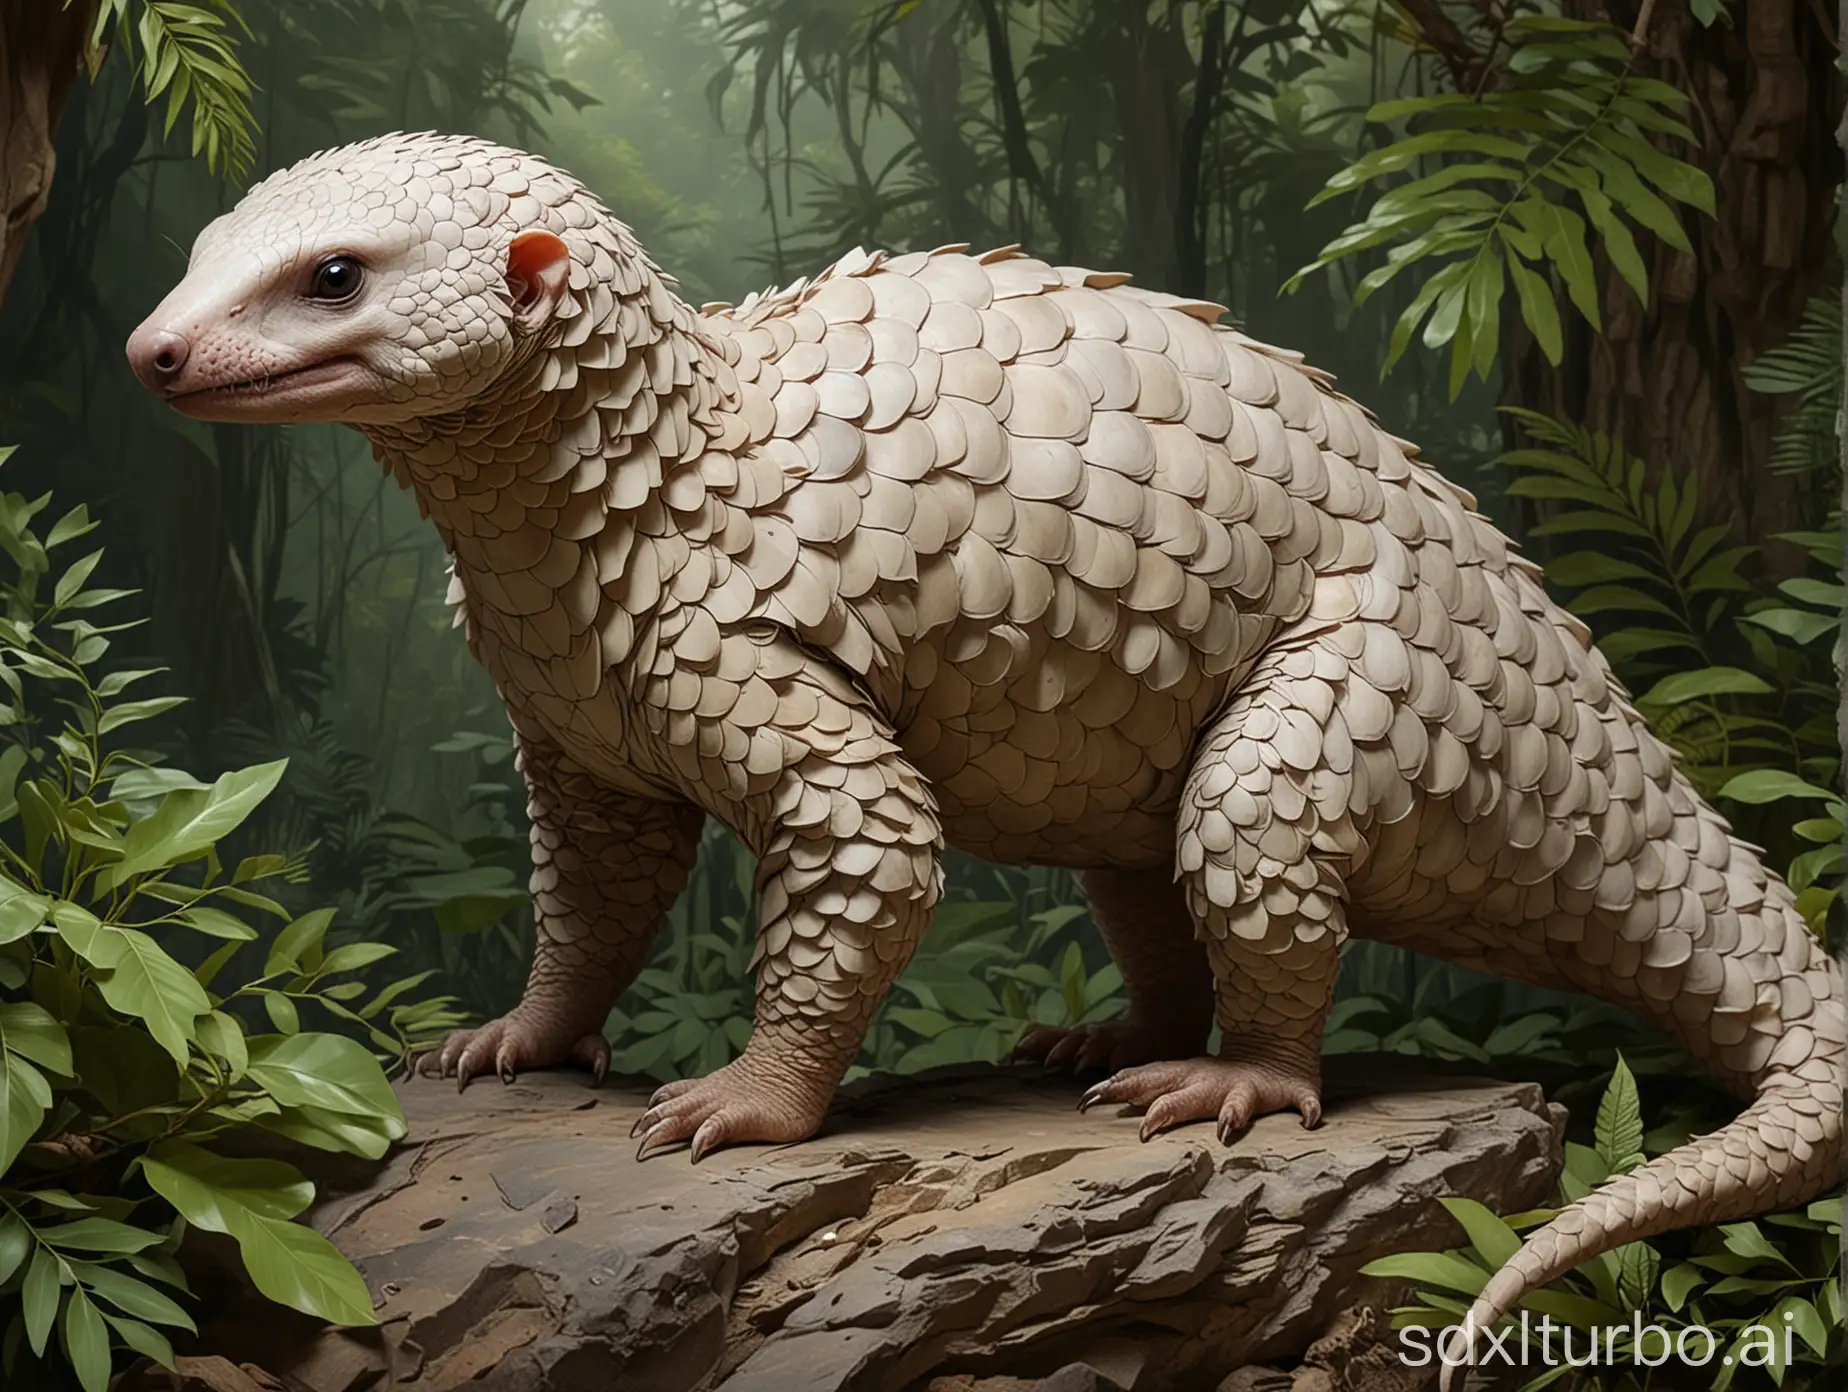 Hybrid-Creature-Pangolin-Anatomy-with-Ferret-Skin-in-JadeRocky-Rainforest